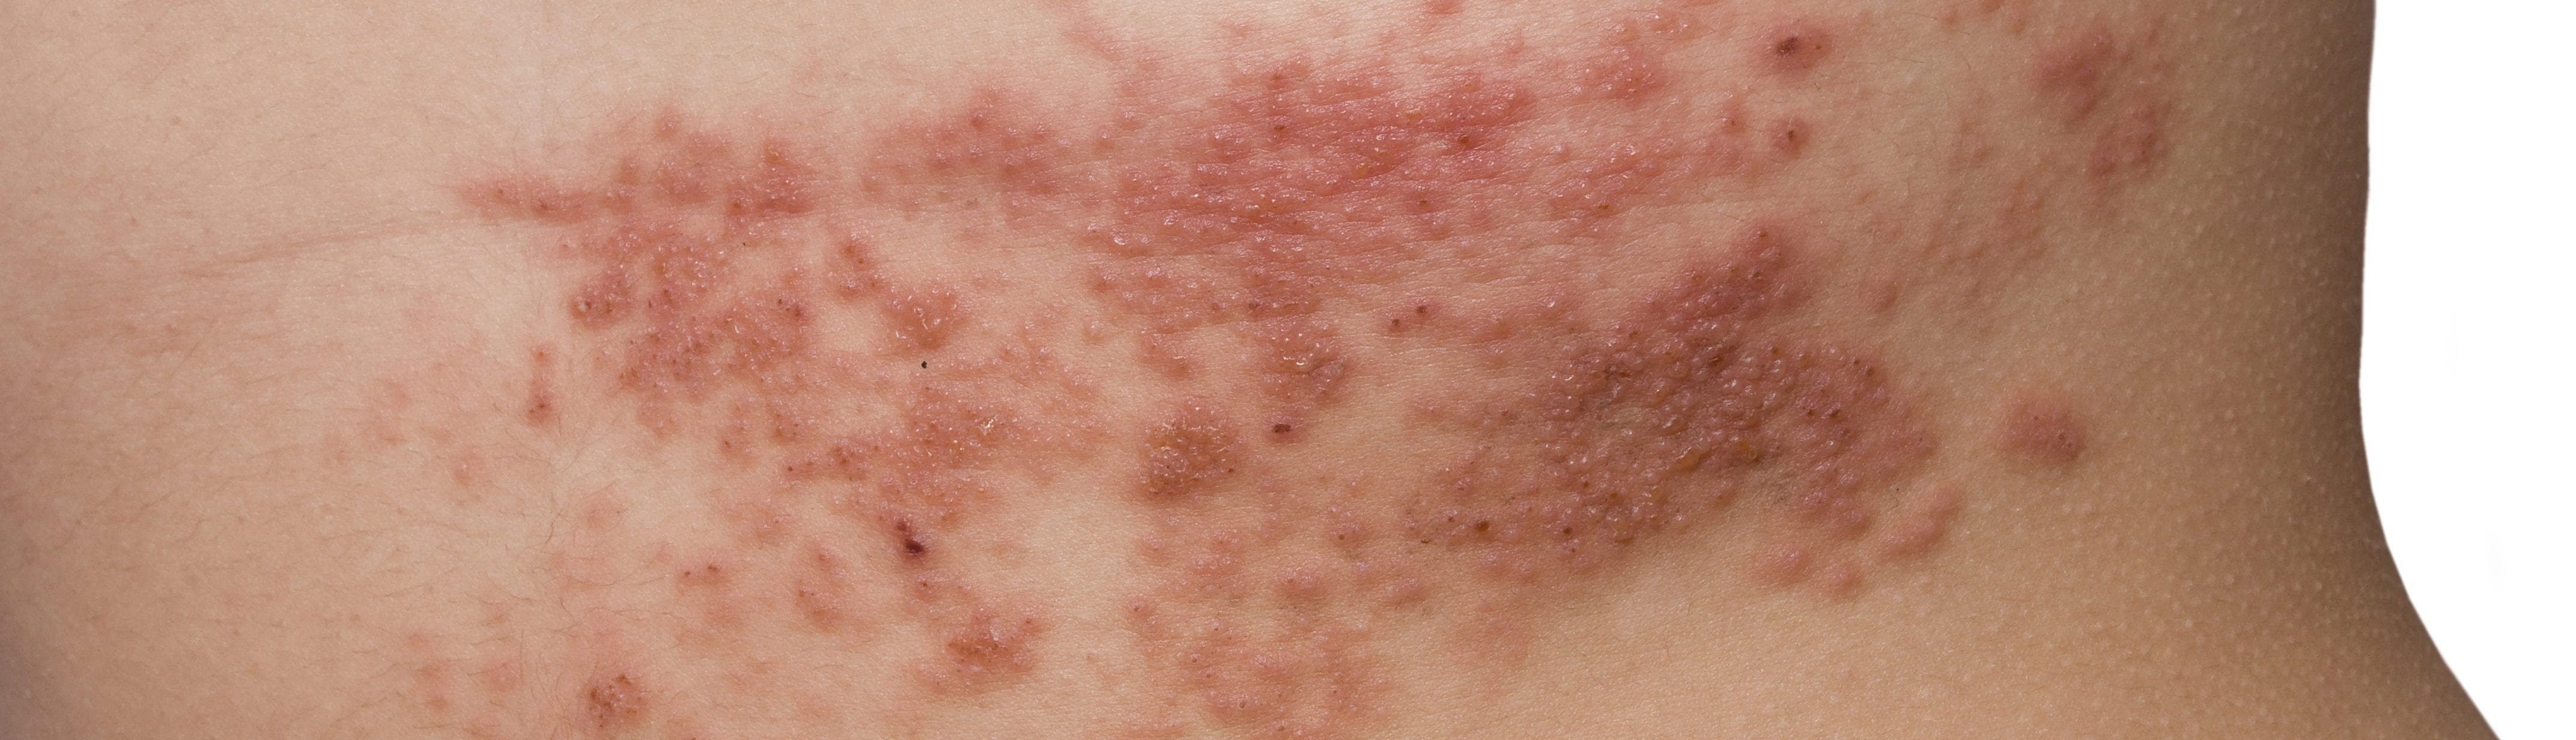 herpes zoster rash (shingles)